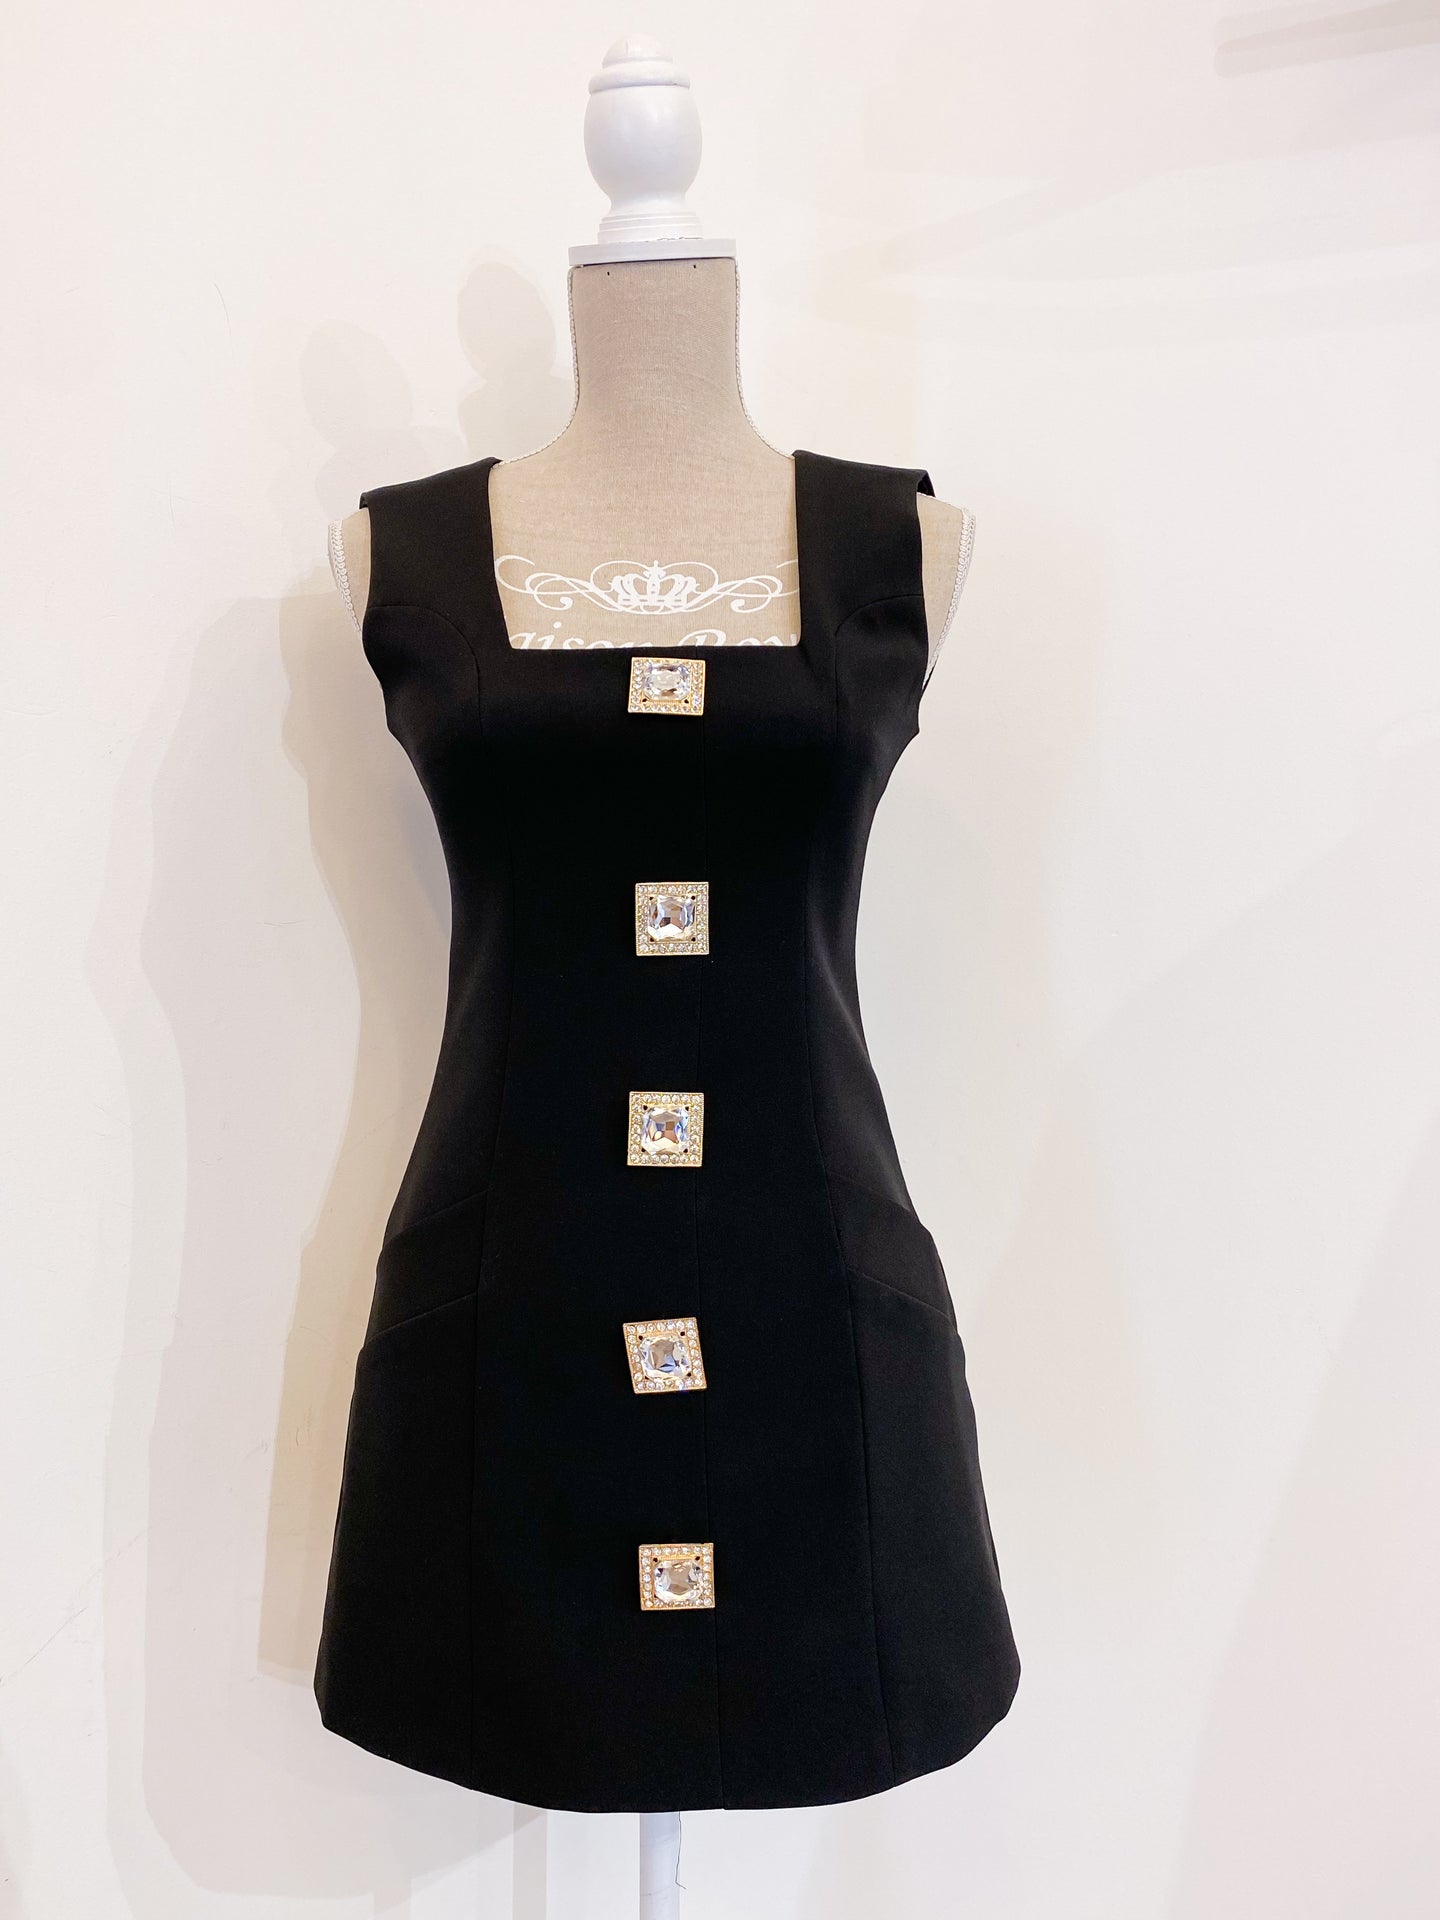 Sheath dress with jewel buttons - Size XS